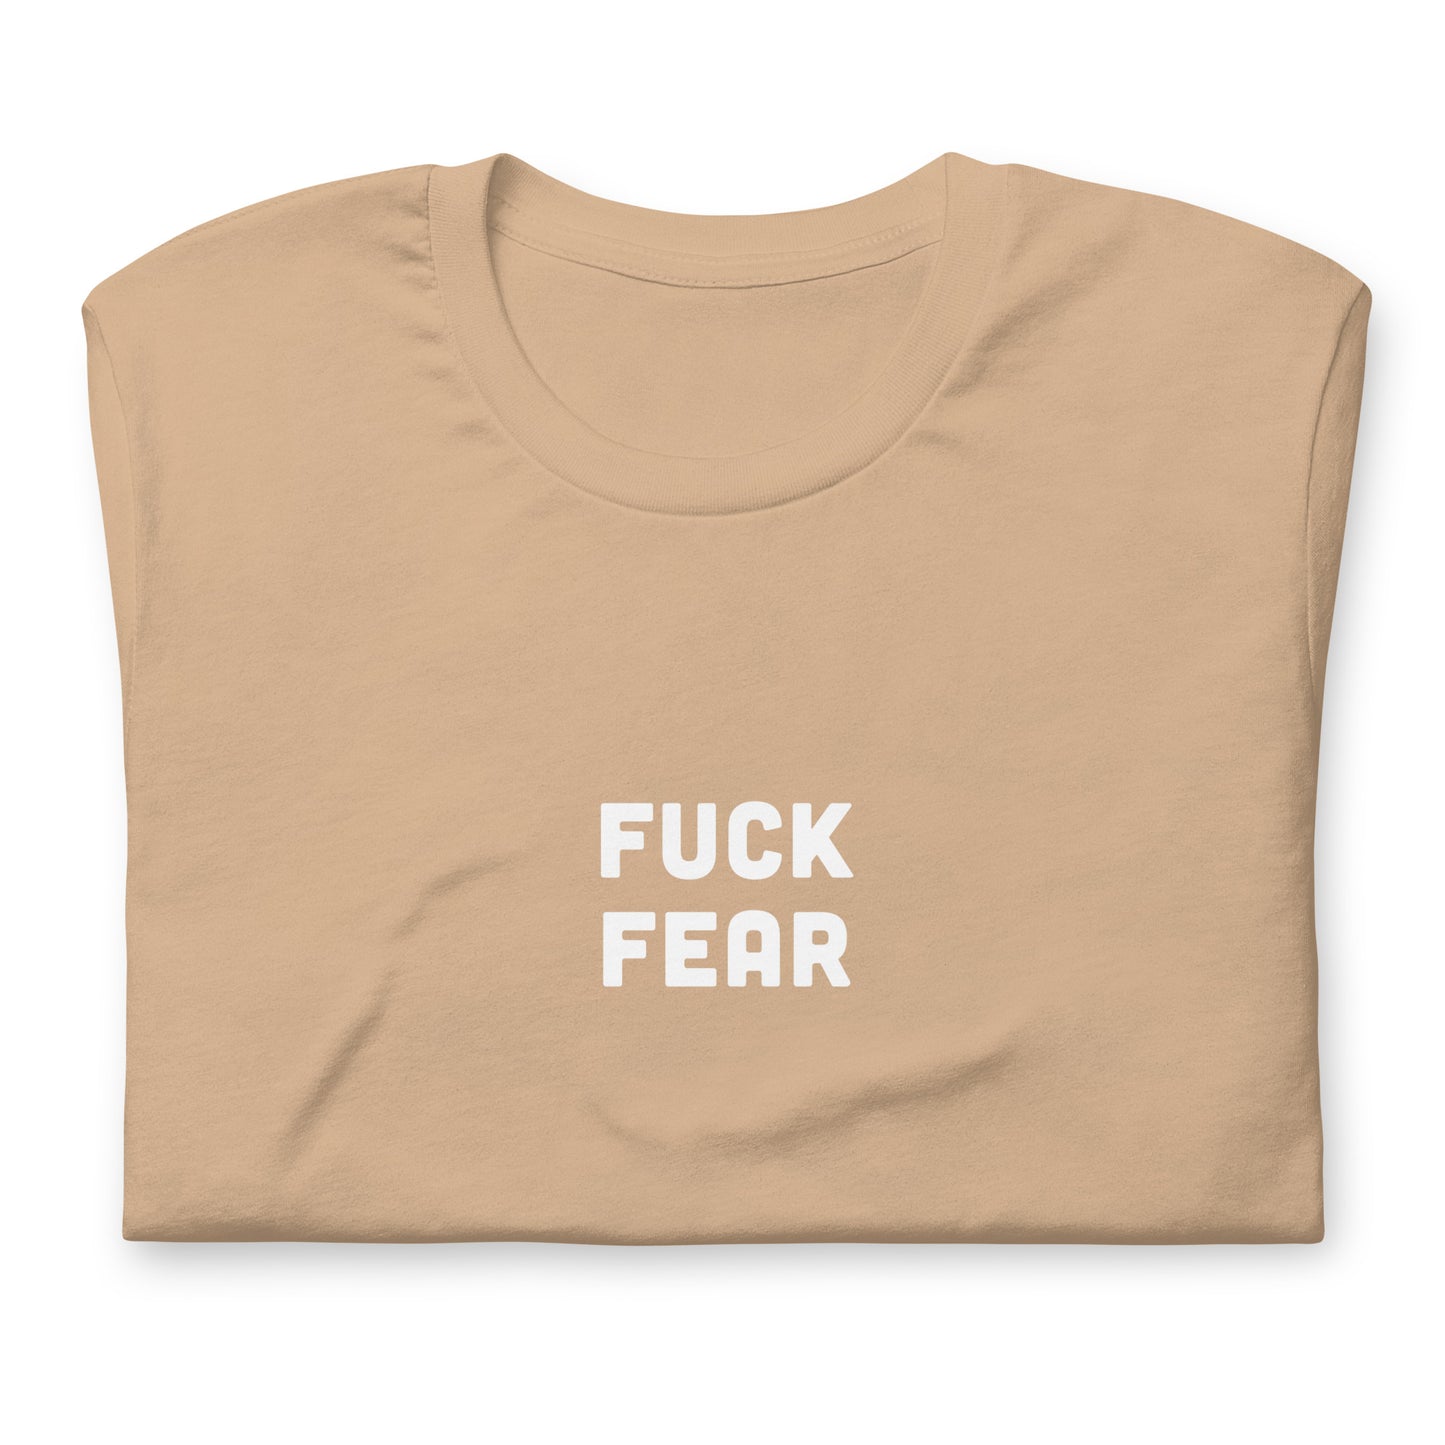 Fuck Fear T-Shirt Size XL Color Forest